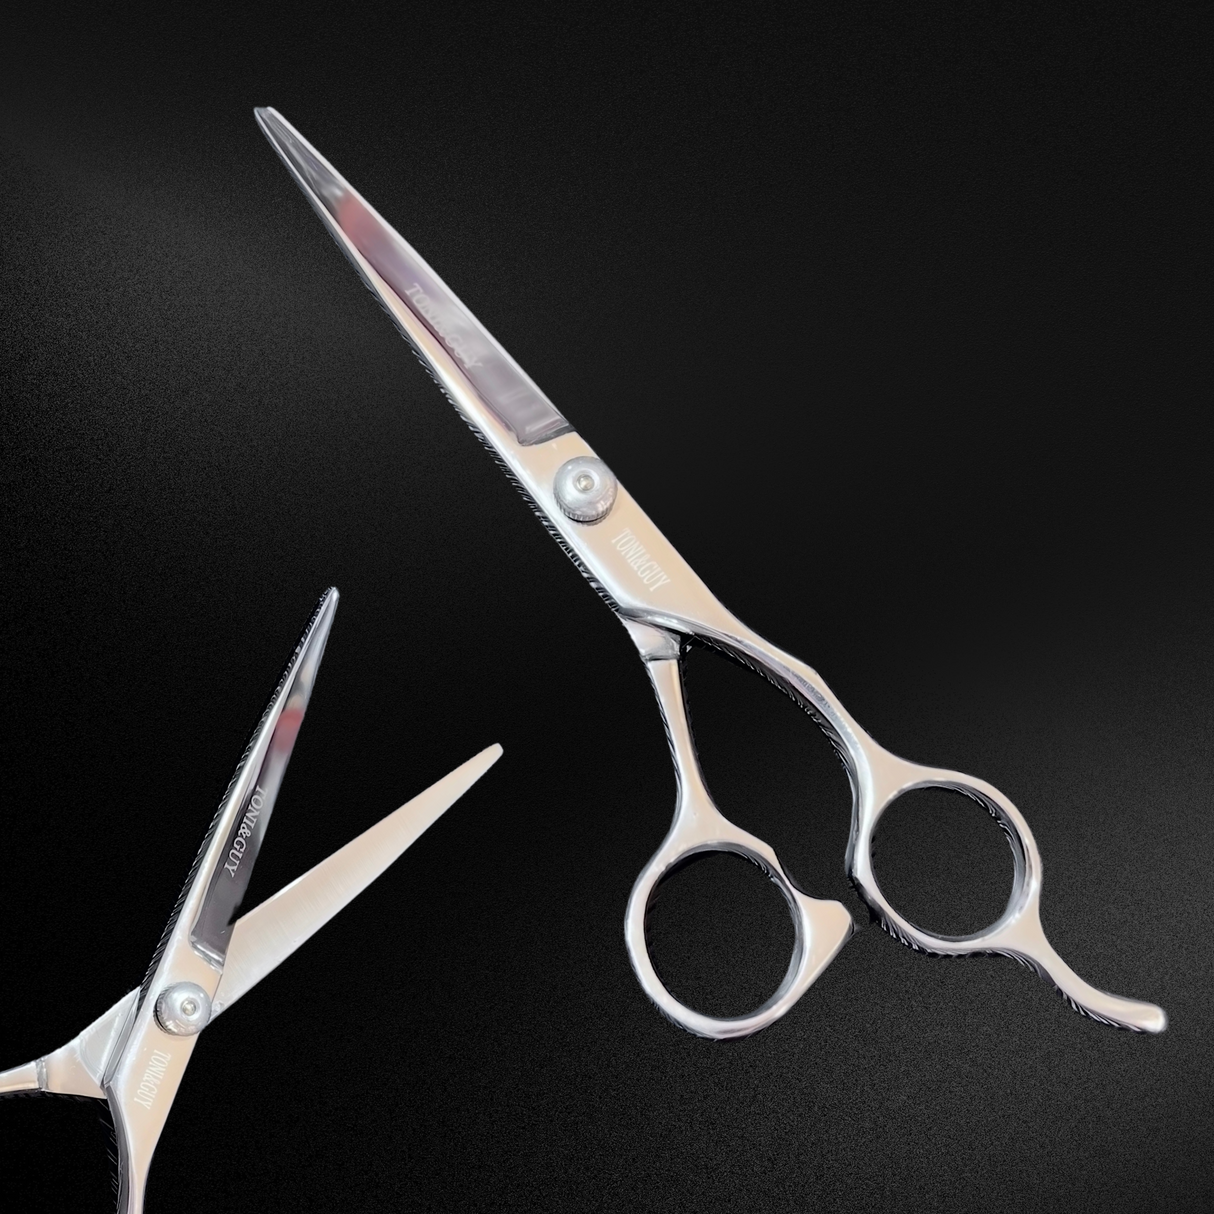 Toni&guy Salon Quality Scissor - Professional use